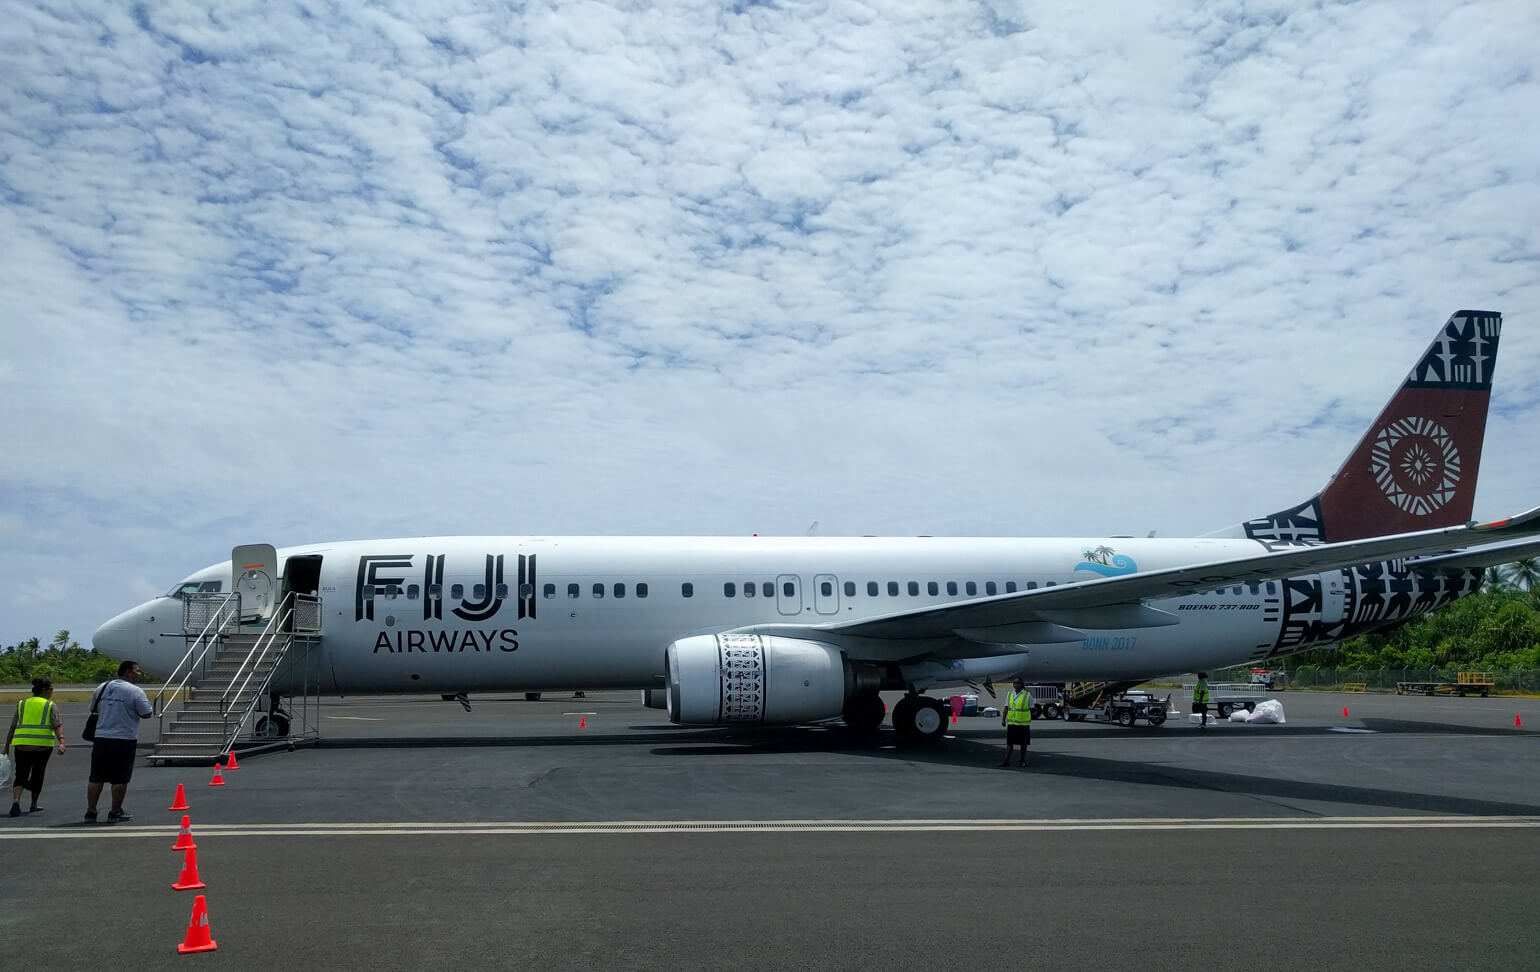 A Fiji Airways plane at Tarawa airport in Kiribati.